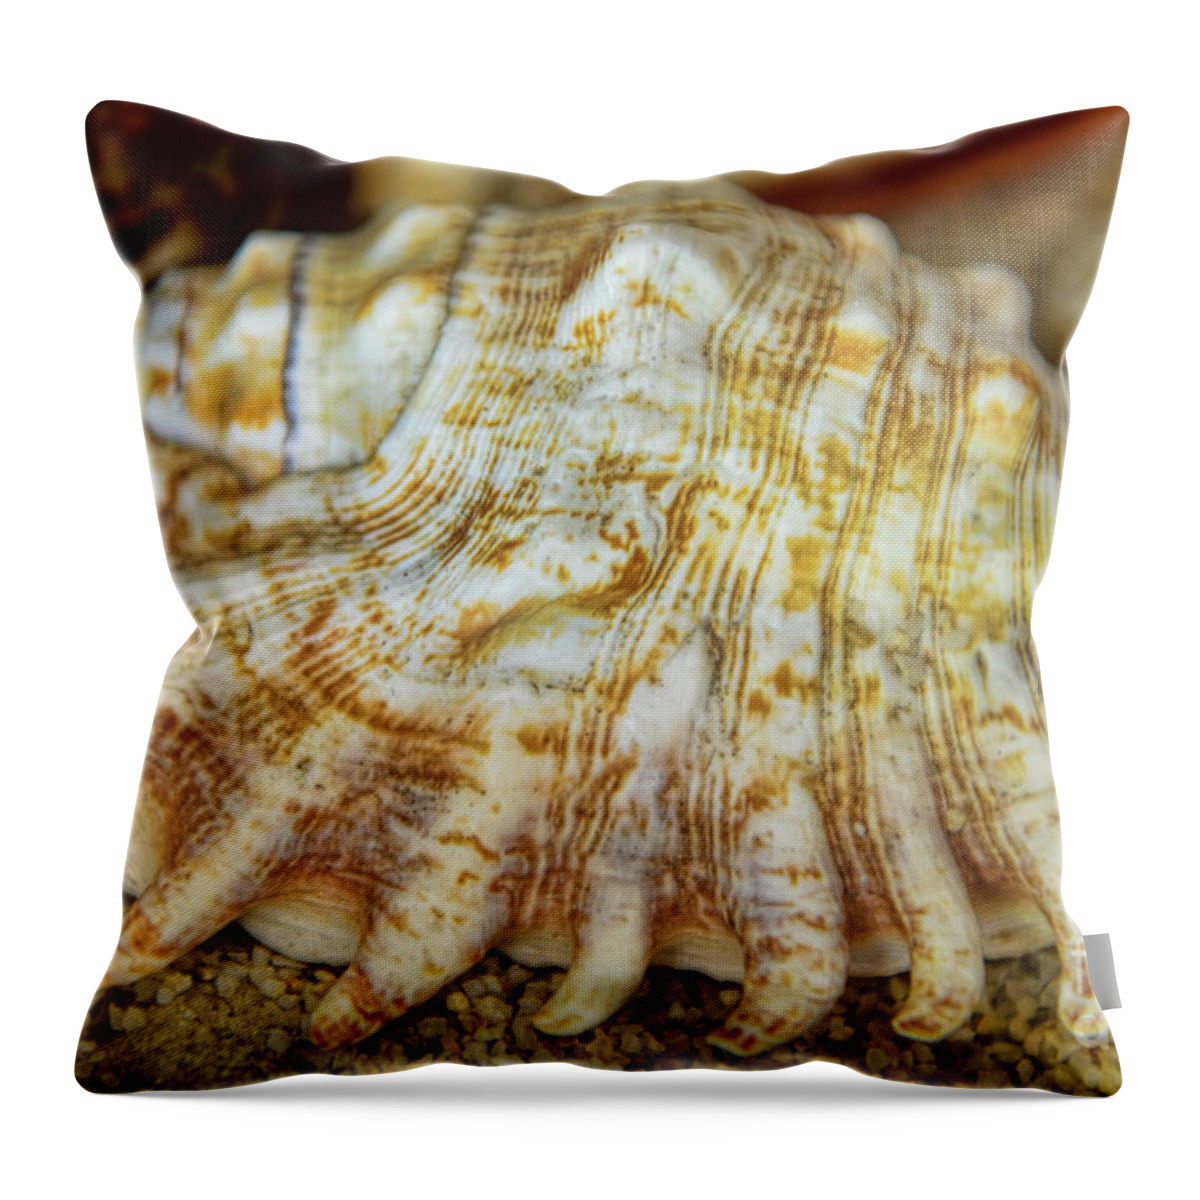 Lambis Seashell Throw Pillow featuring the photograph Lambis Seashell by Olga Hamilton